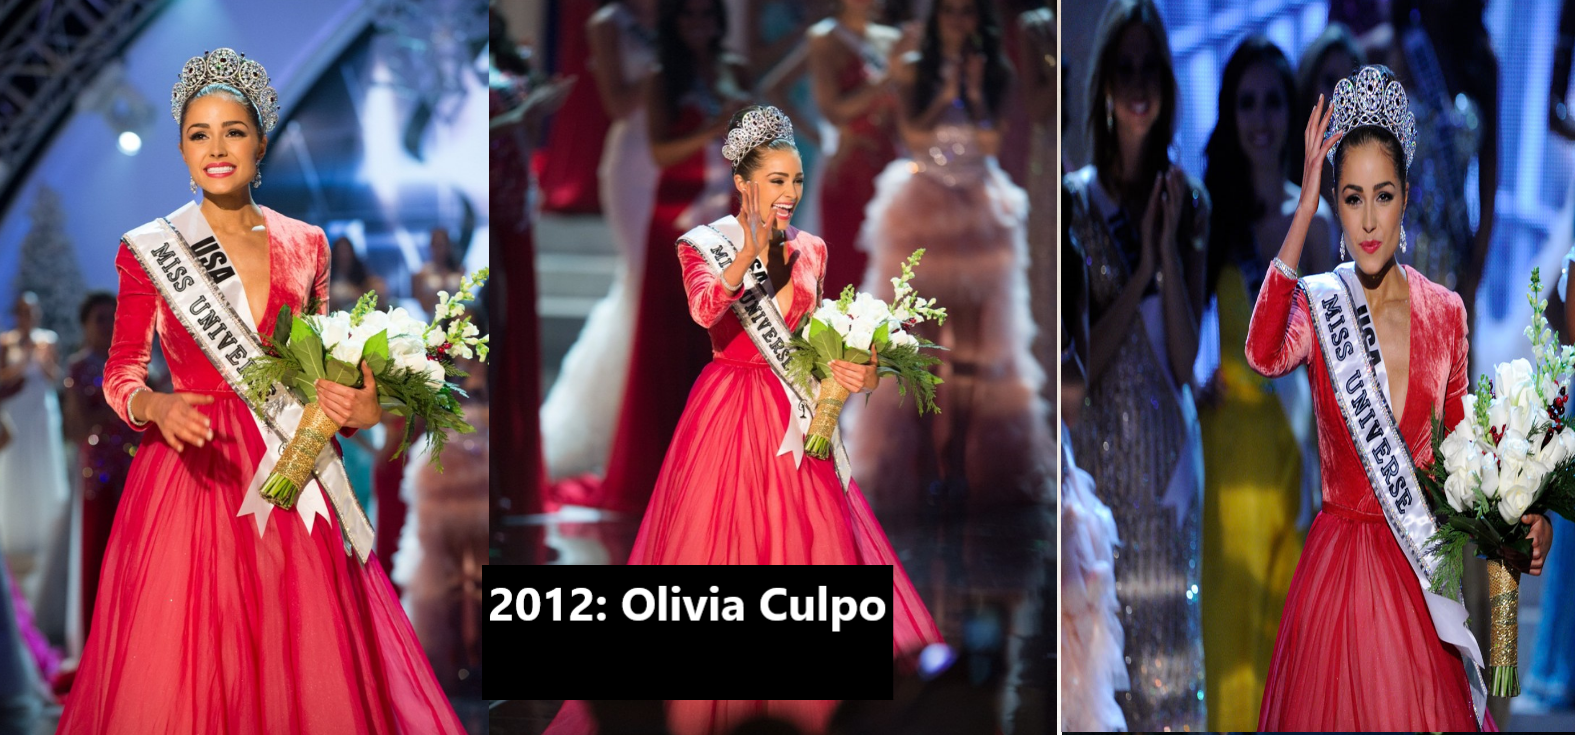 2012: Olivia Culpo
